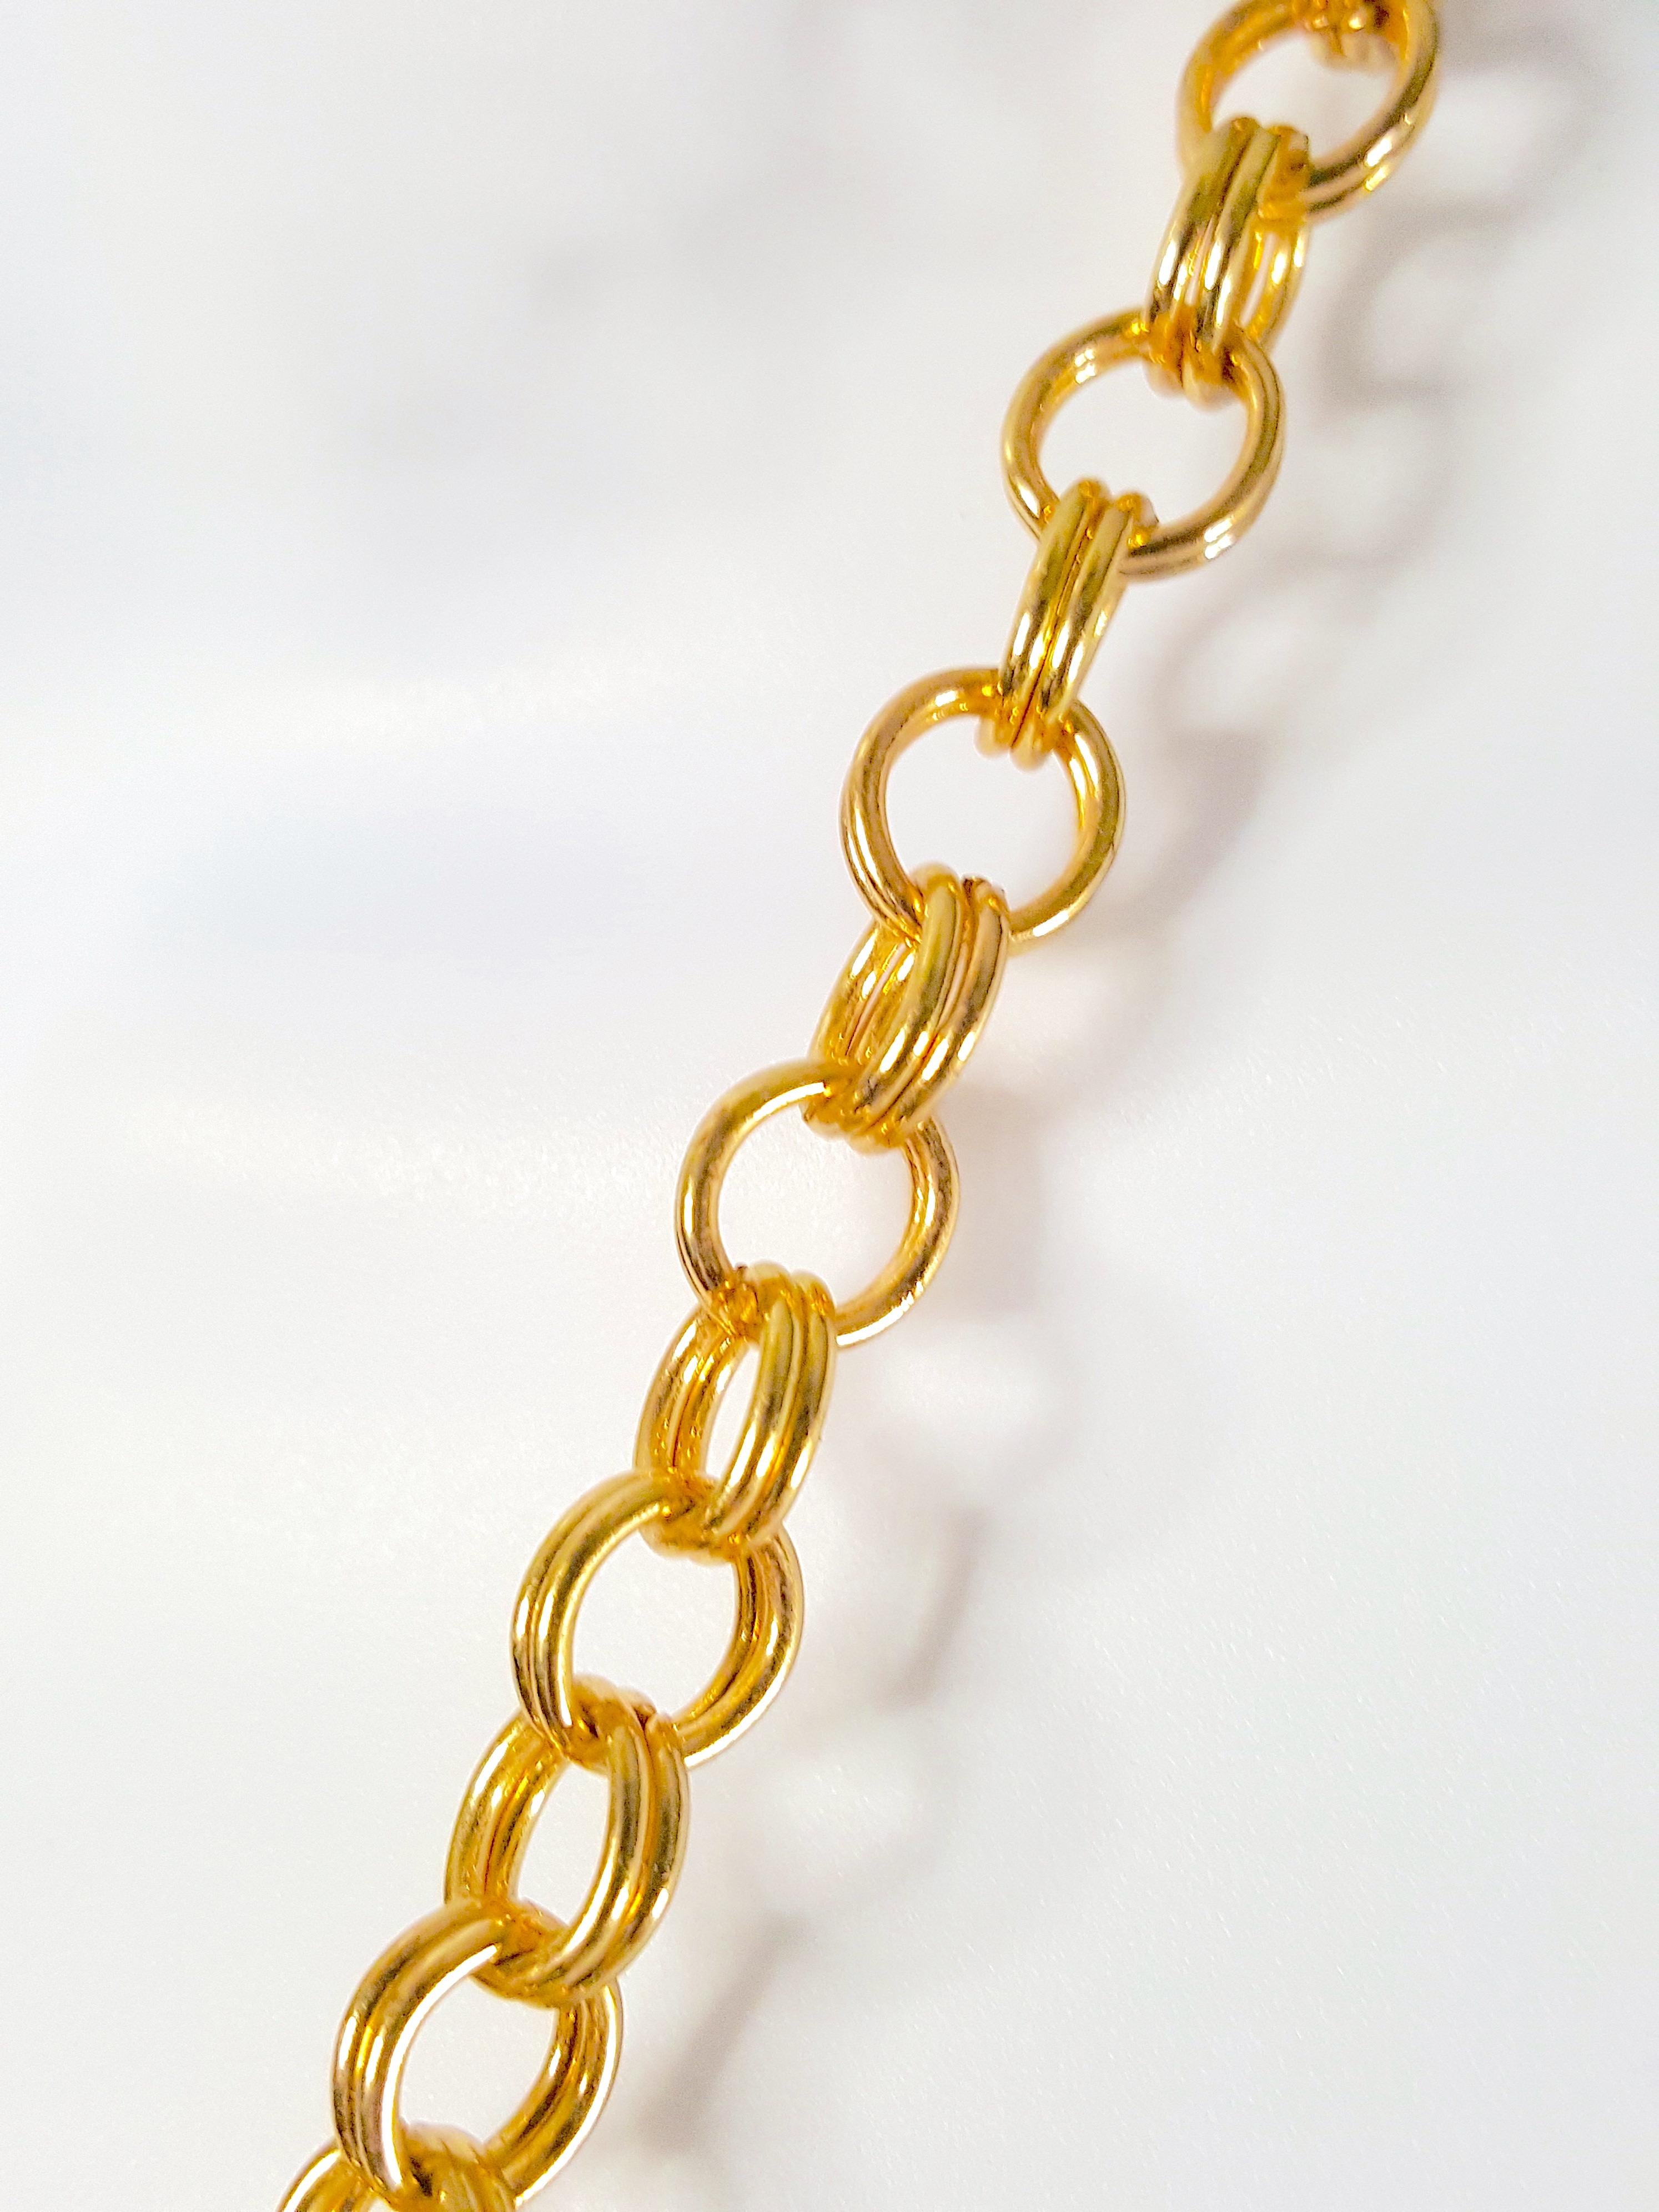 Bakelite 1930s German ArtDeco GoldRinged EmeraldBallPendants ChainLink Necklace For Sale 1